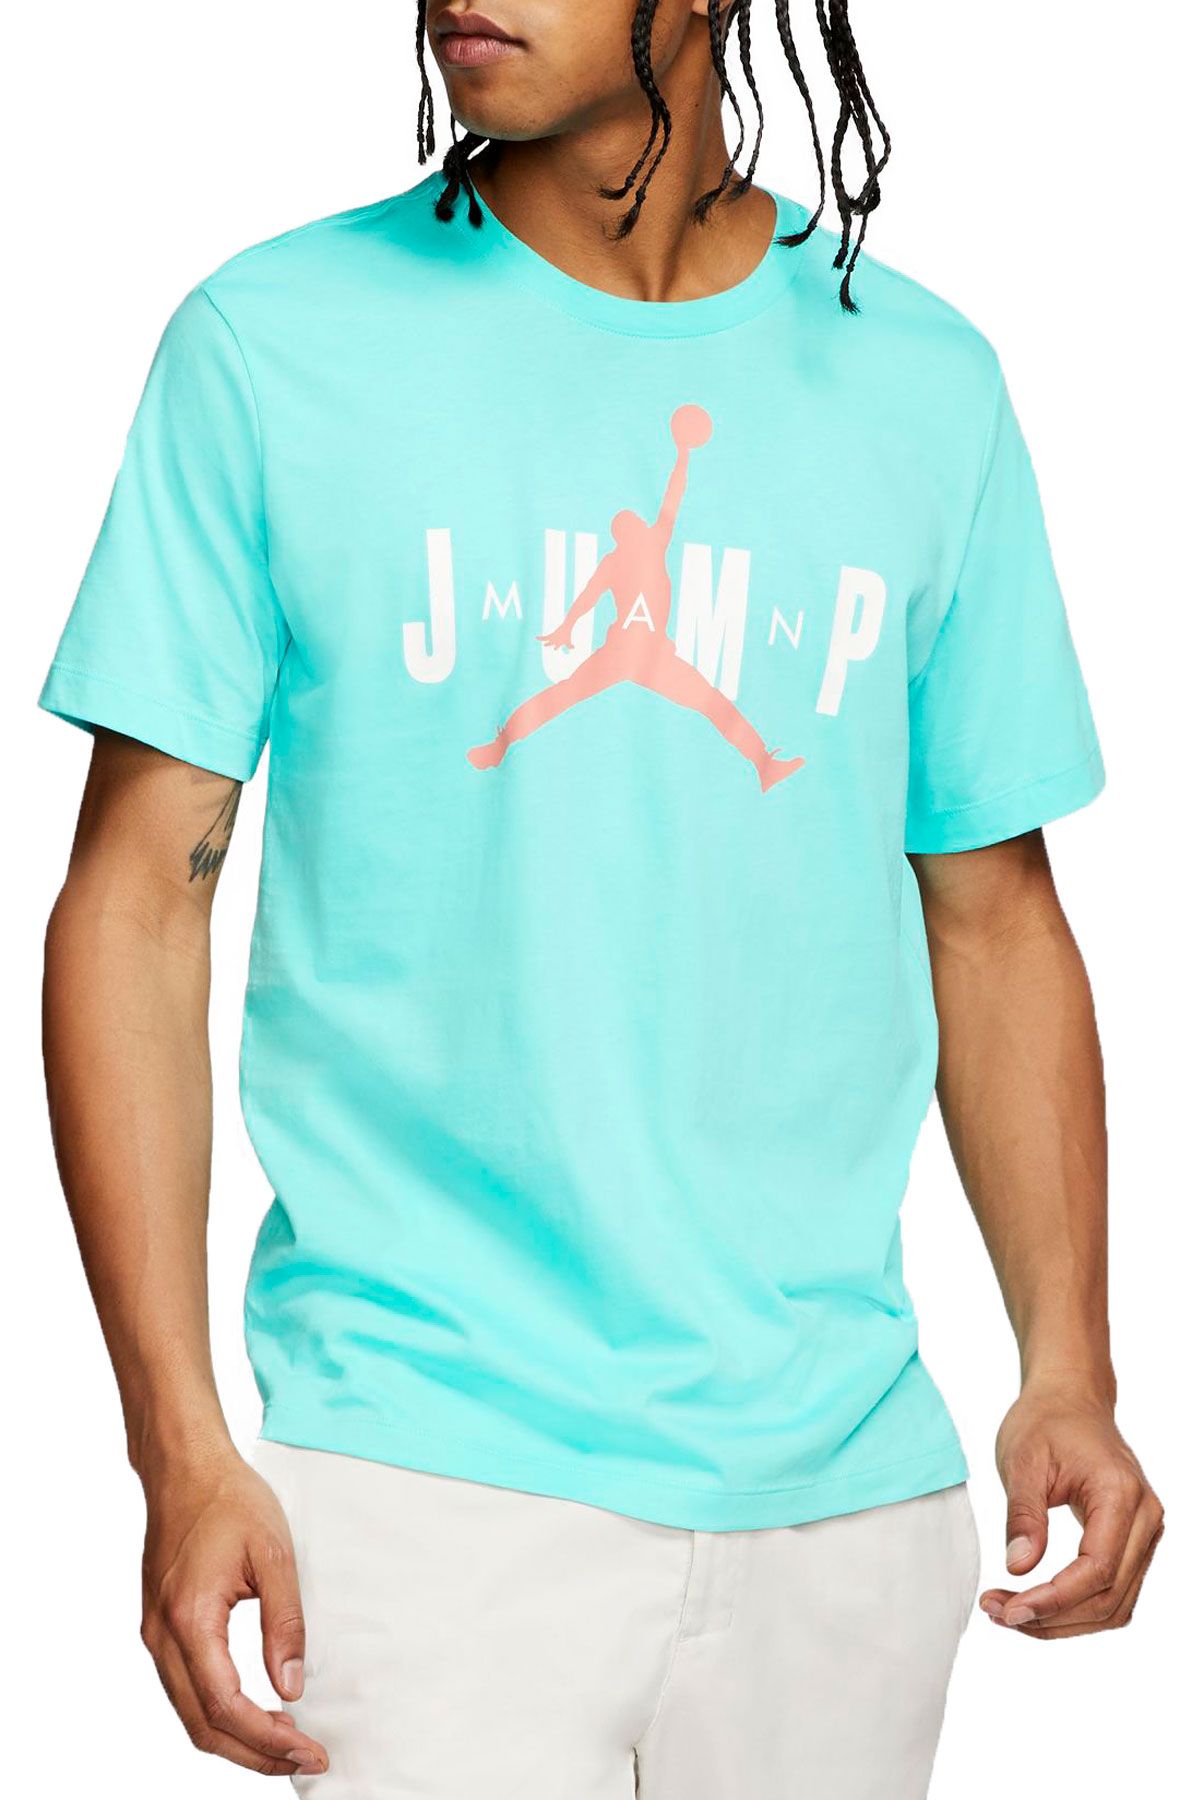 jordan 12 light aqua shirt